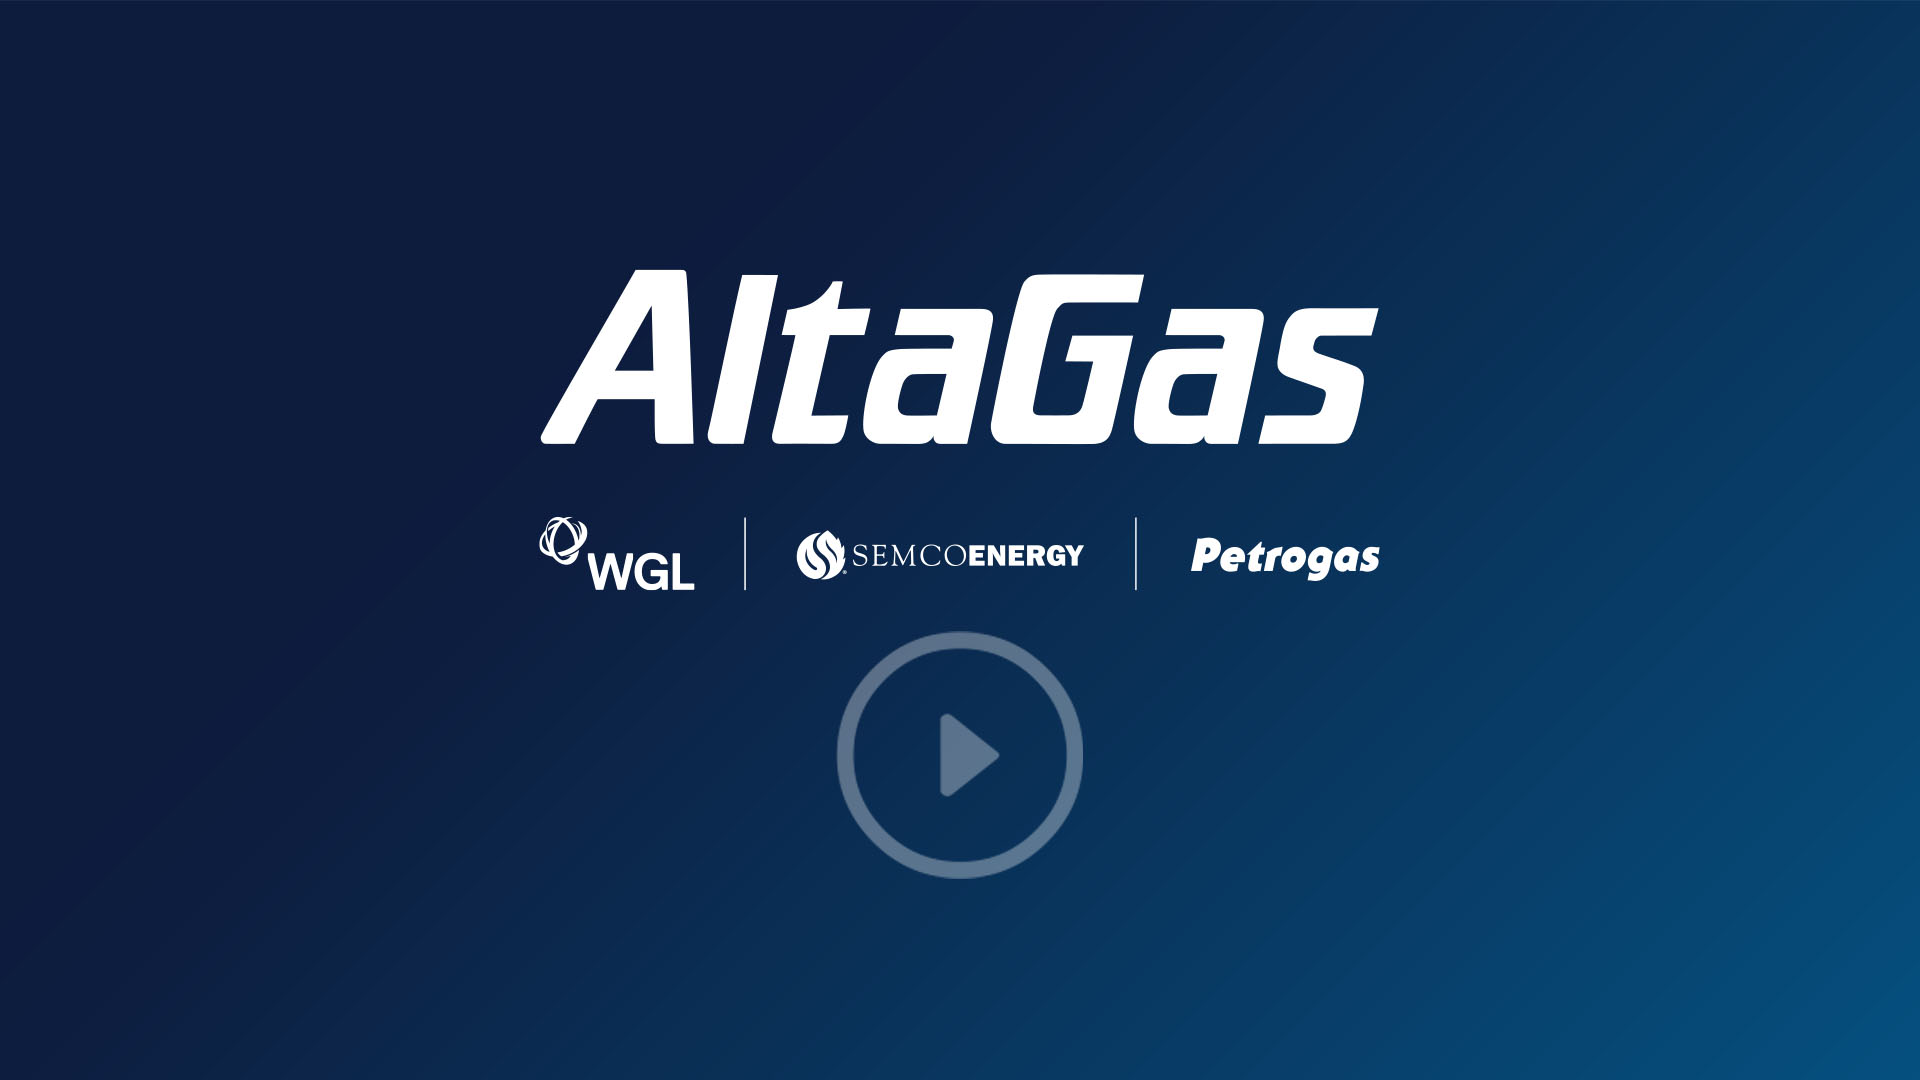 AltaGas Core Values Video